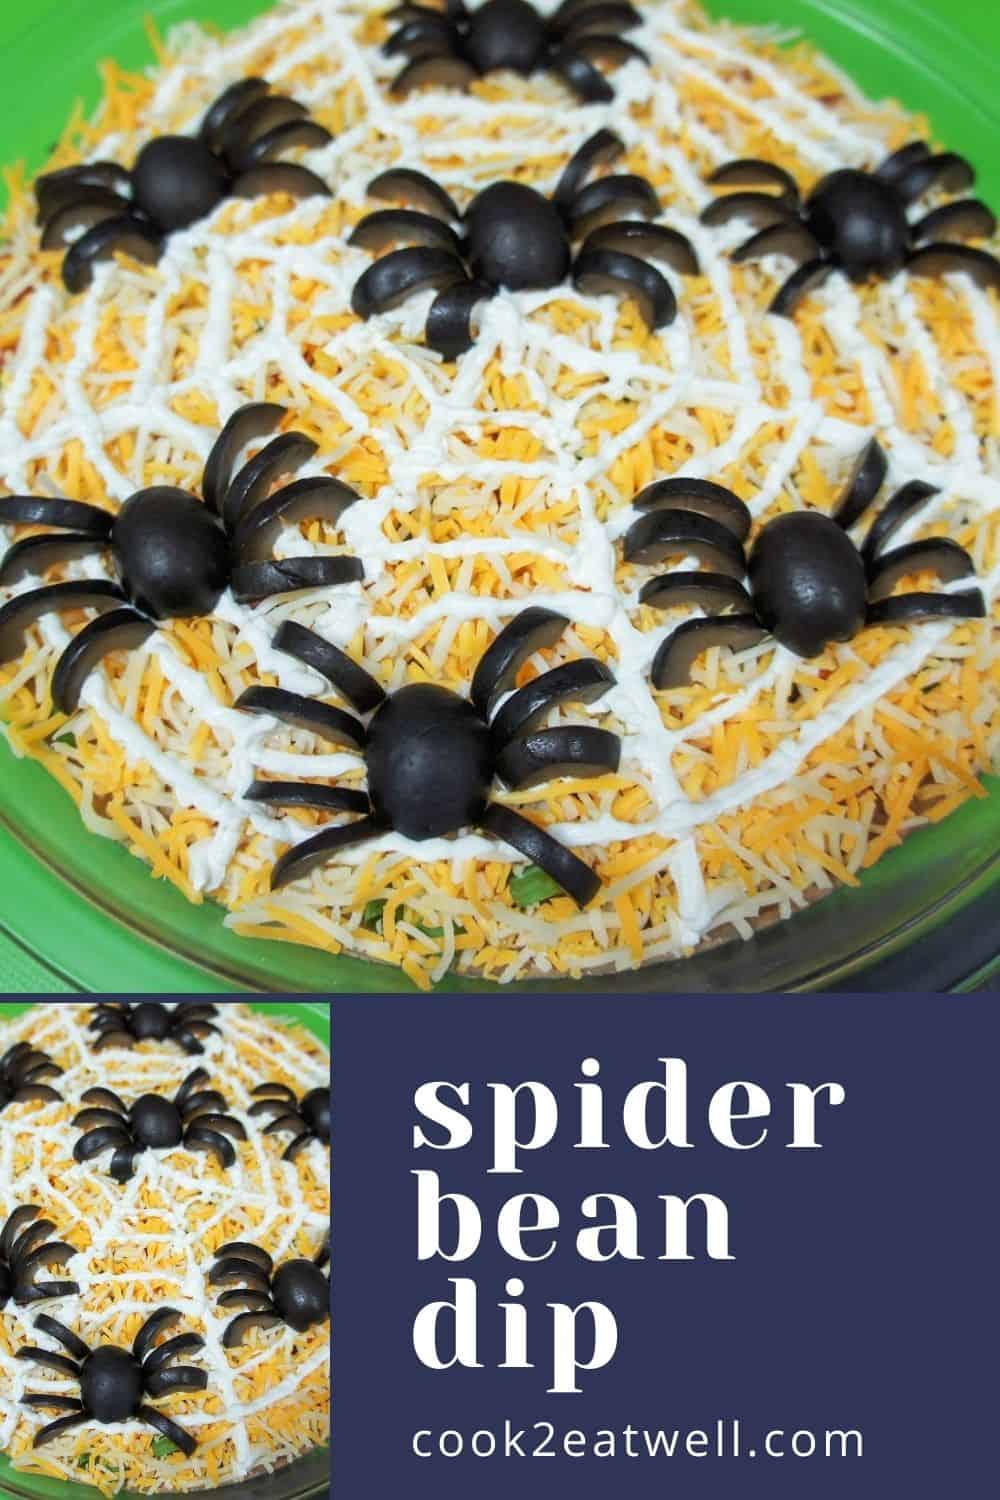 Halloween Spider Bean Dip - Cook2eatwell